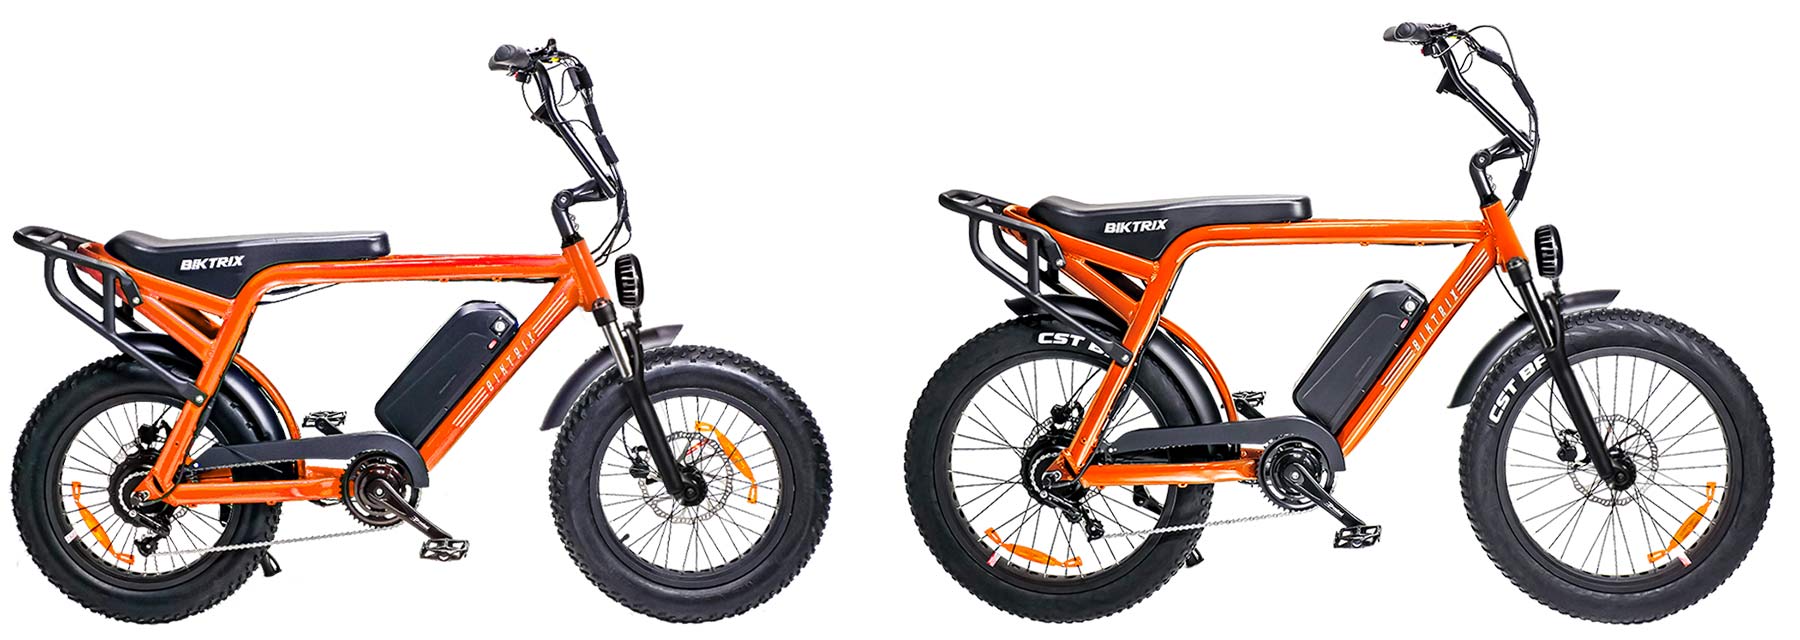 Biktrix Moto e-bike, urban mobility eMTB e-moped alternative transportation, sizes